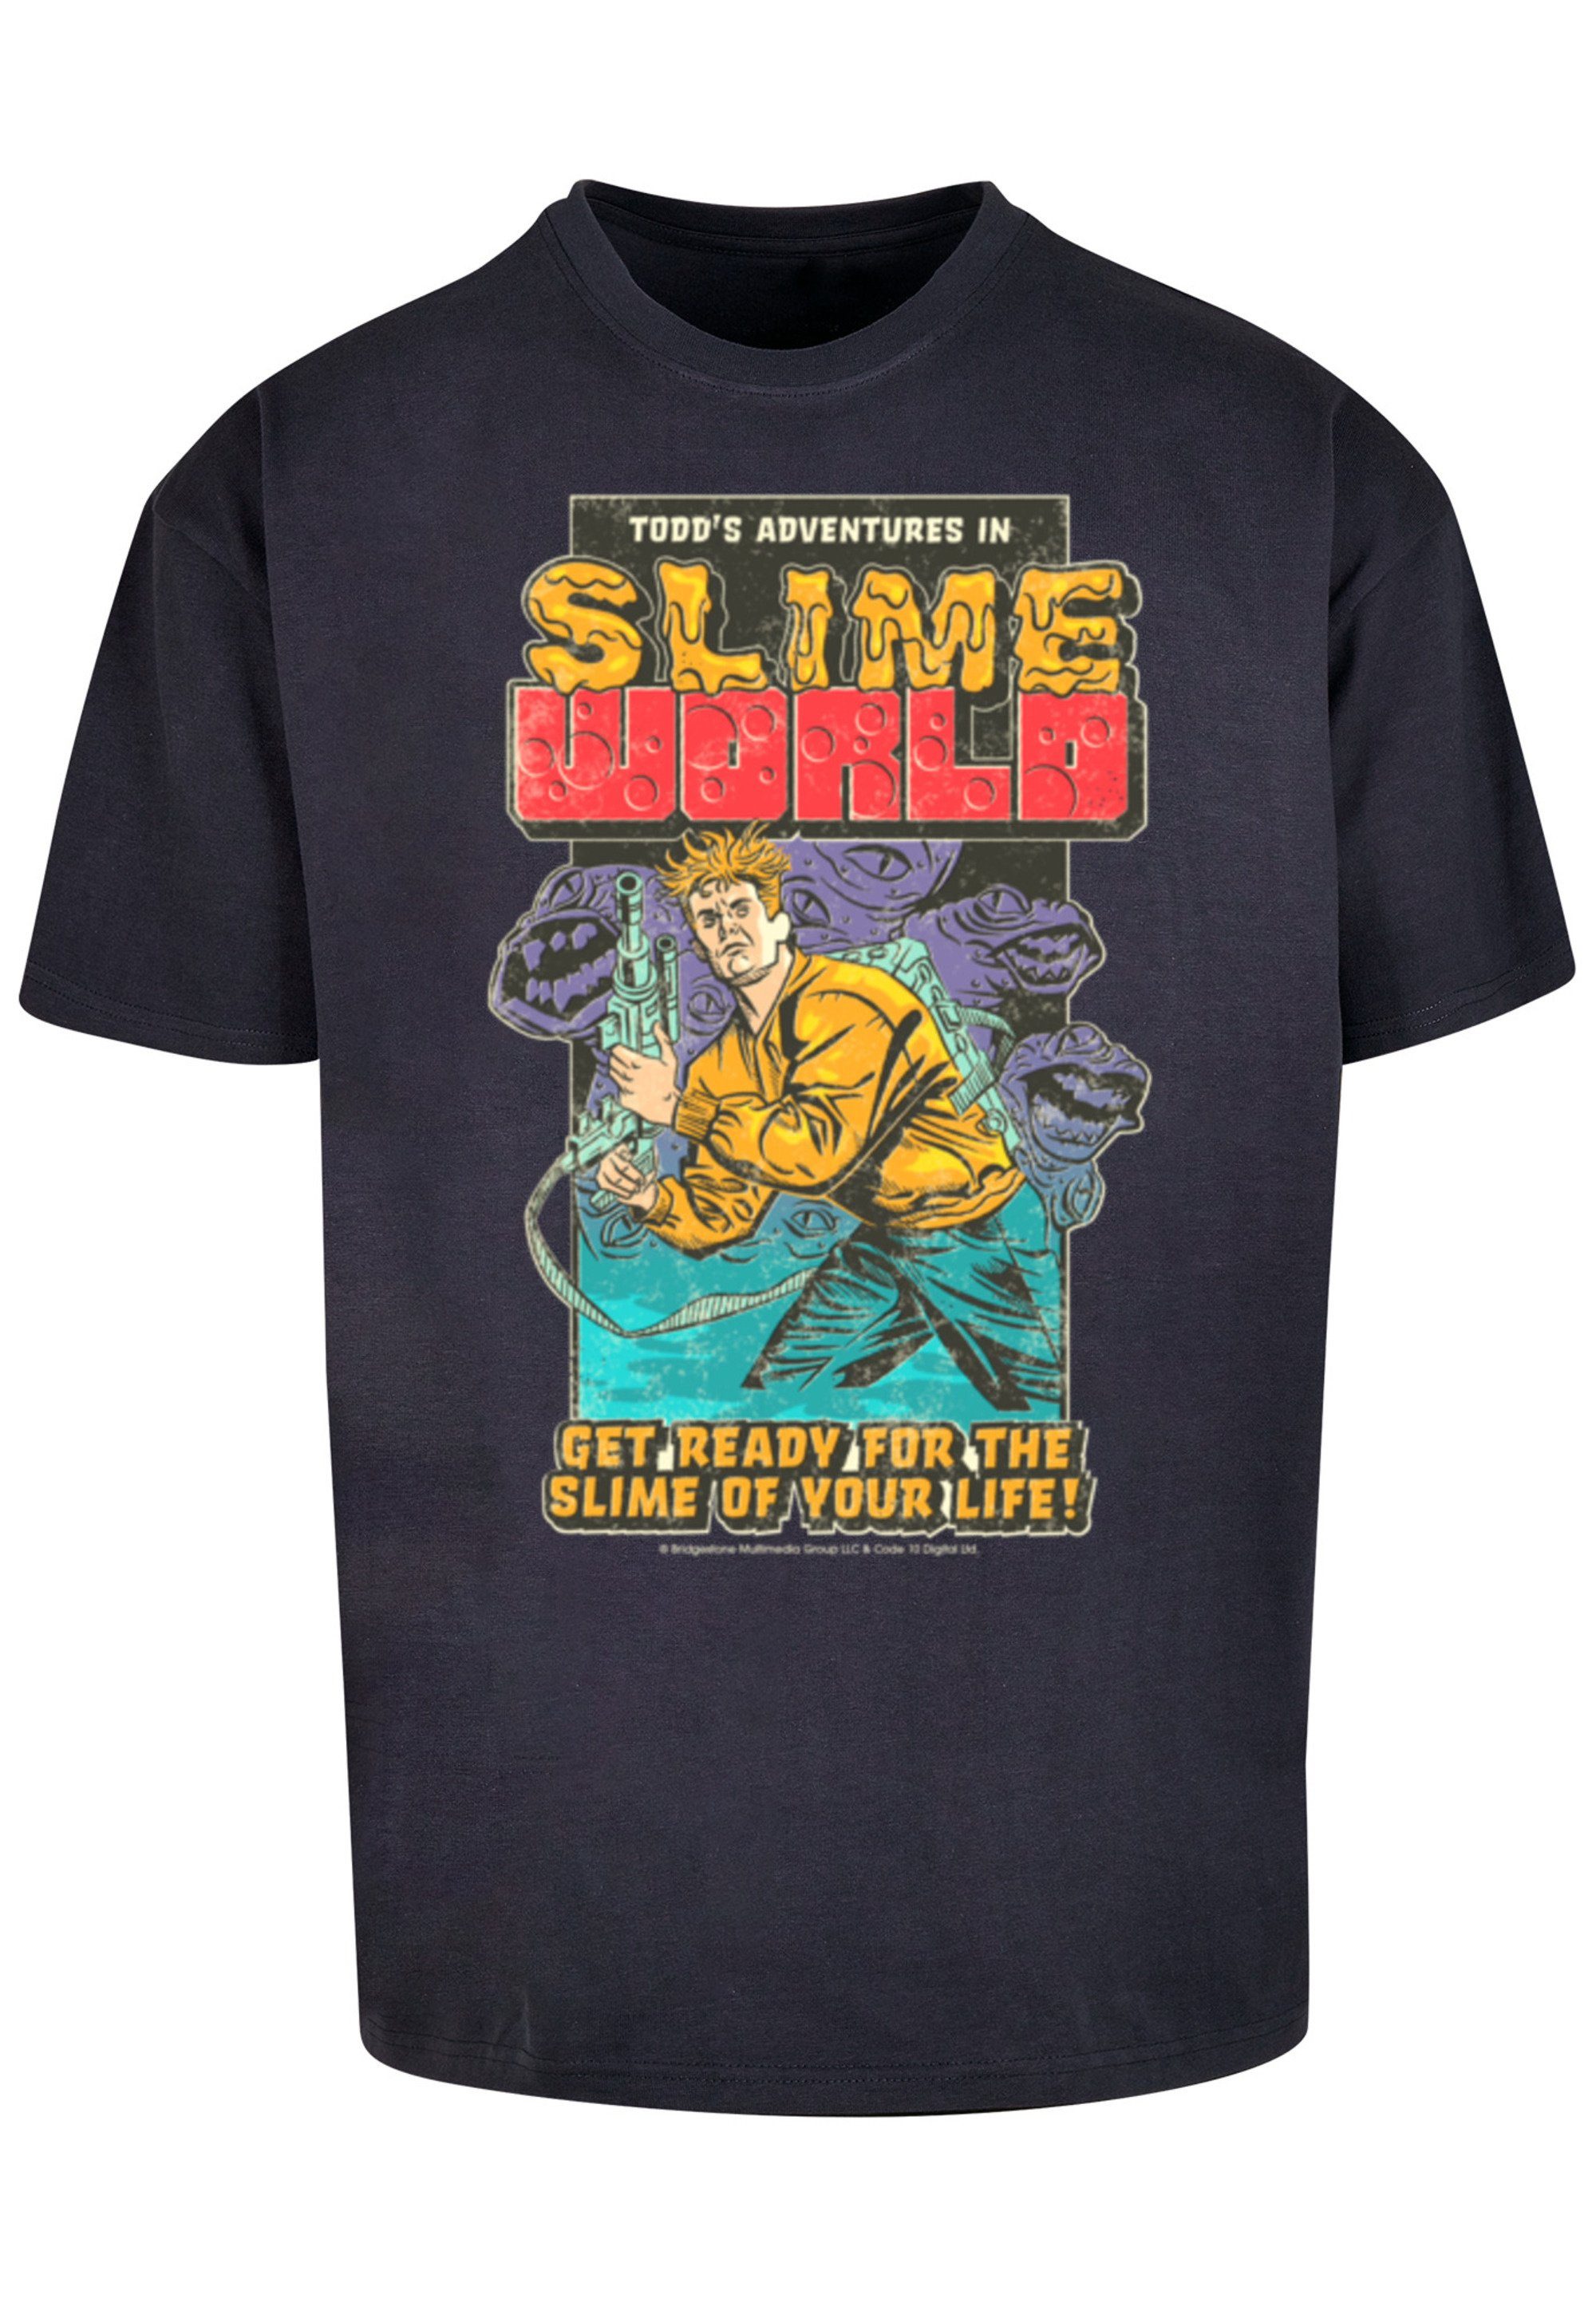 F4NT4STIC T-Shirt Retro Todd's navy Adventures SlimeWorld Gaming Print In